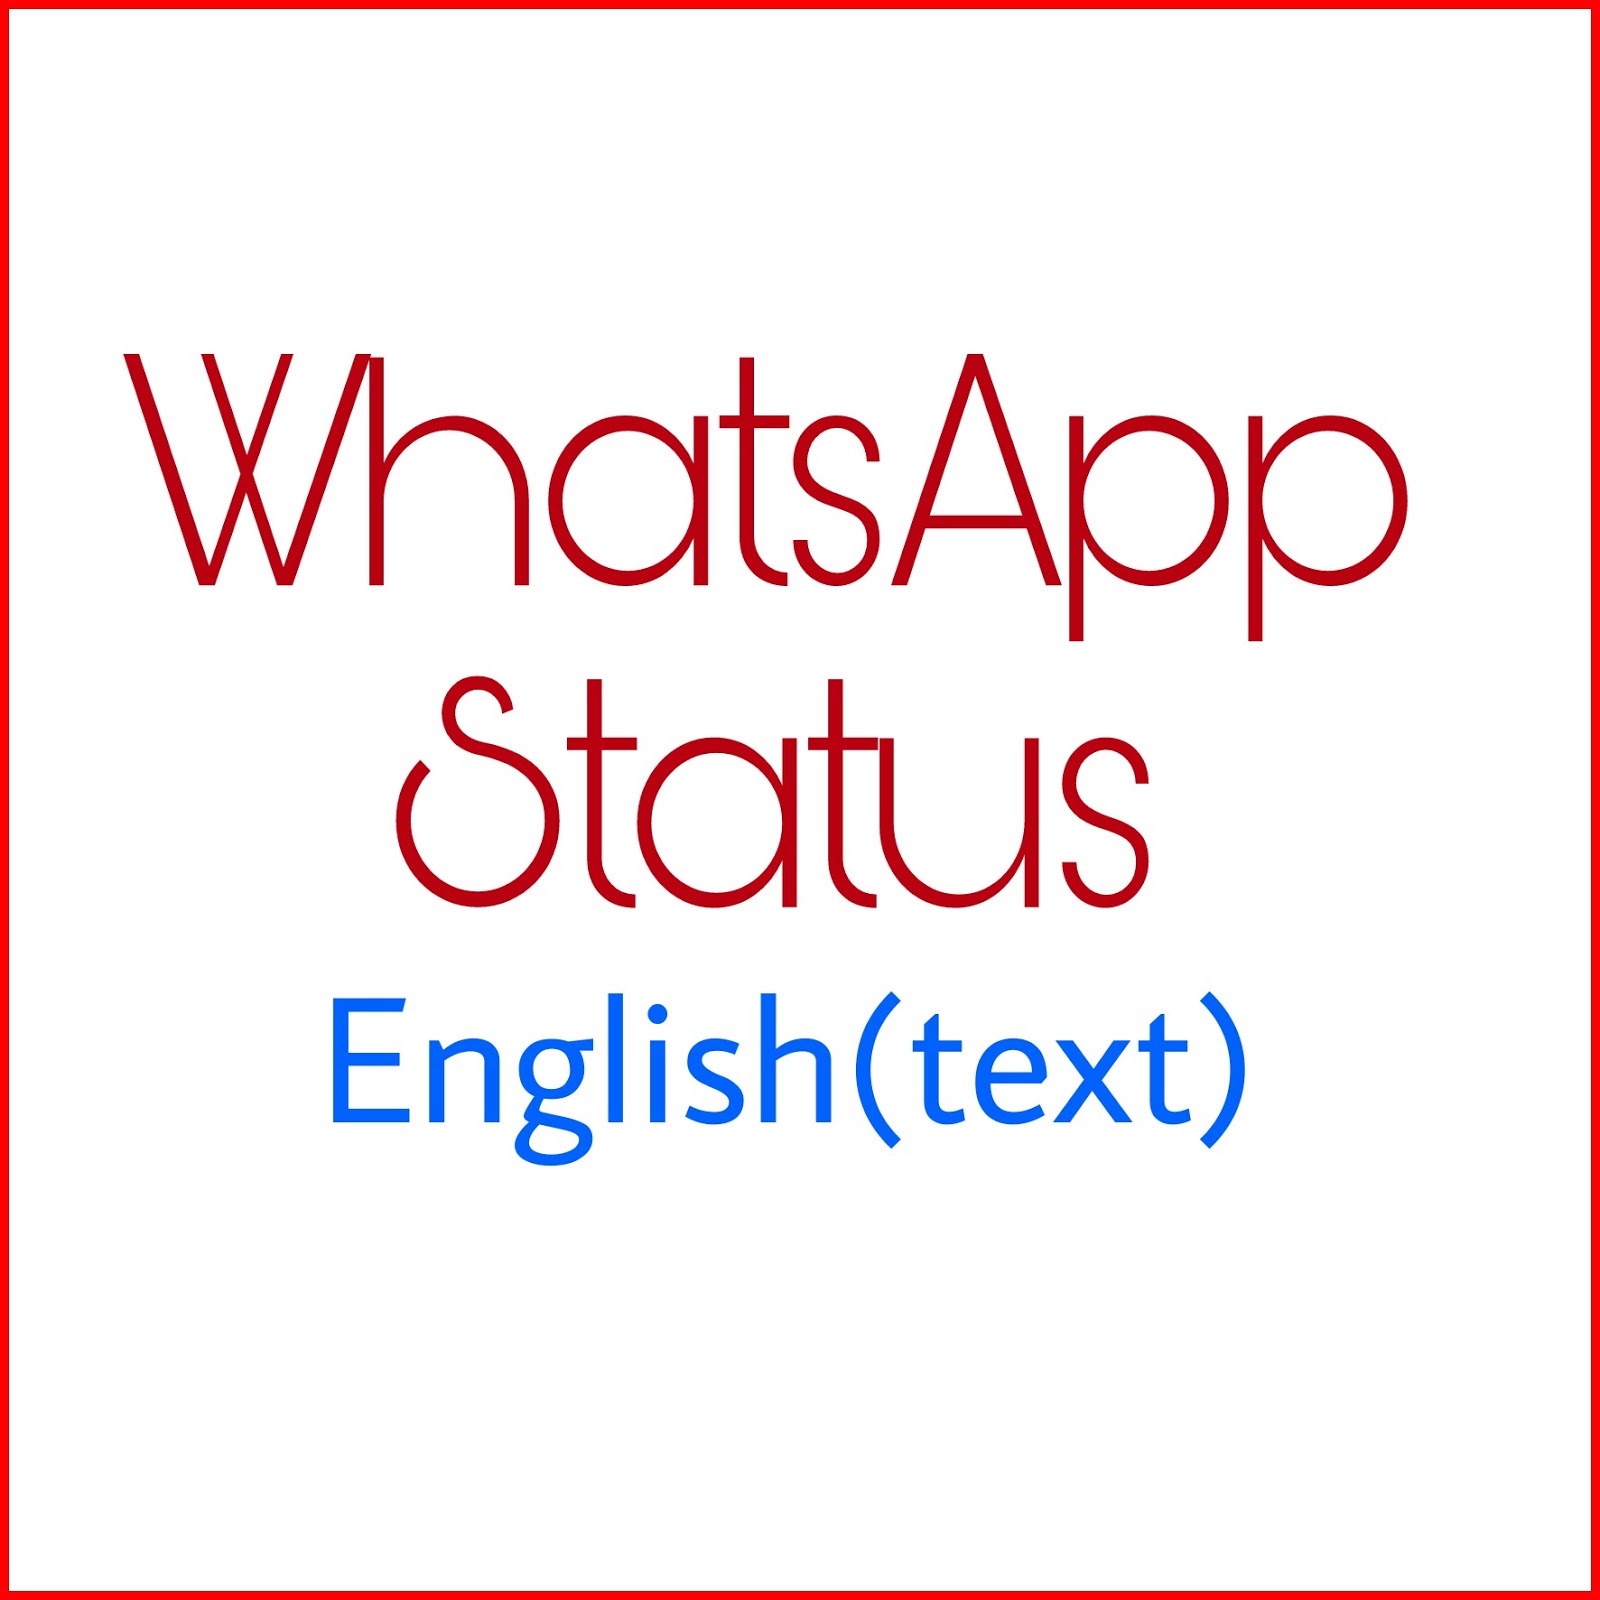 WhatsApp Status- English (text) - WhatsAppienCe